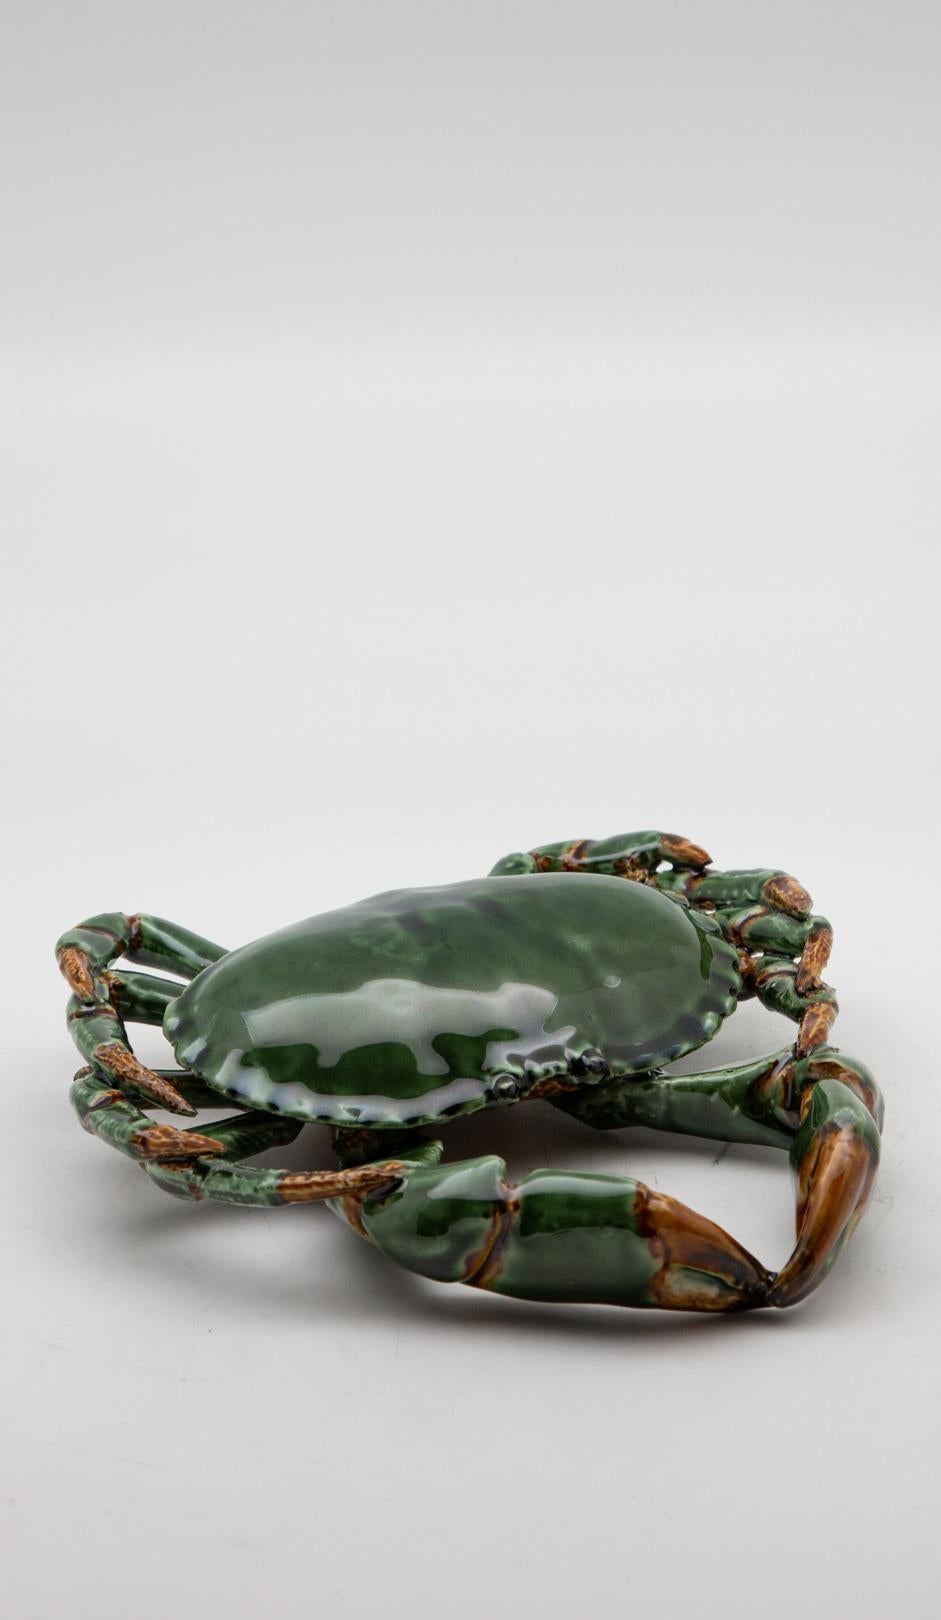 Contemporary Portuguese Handmade Pallissy or Majollica Green Ceramic Crab